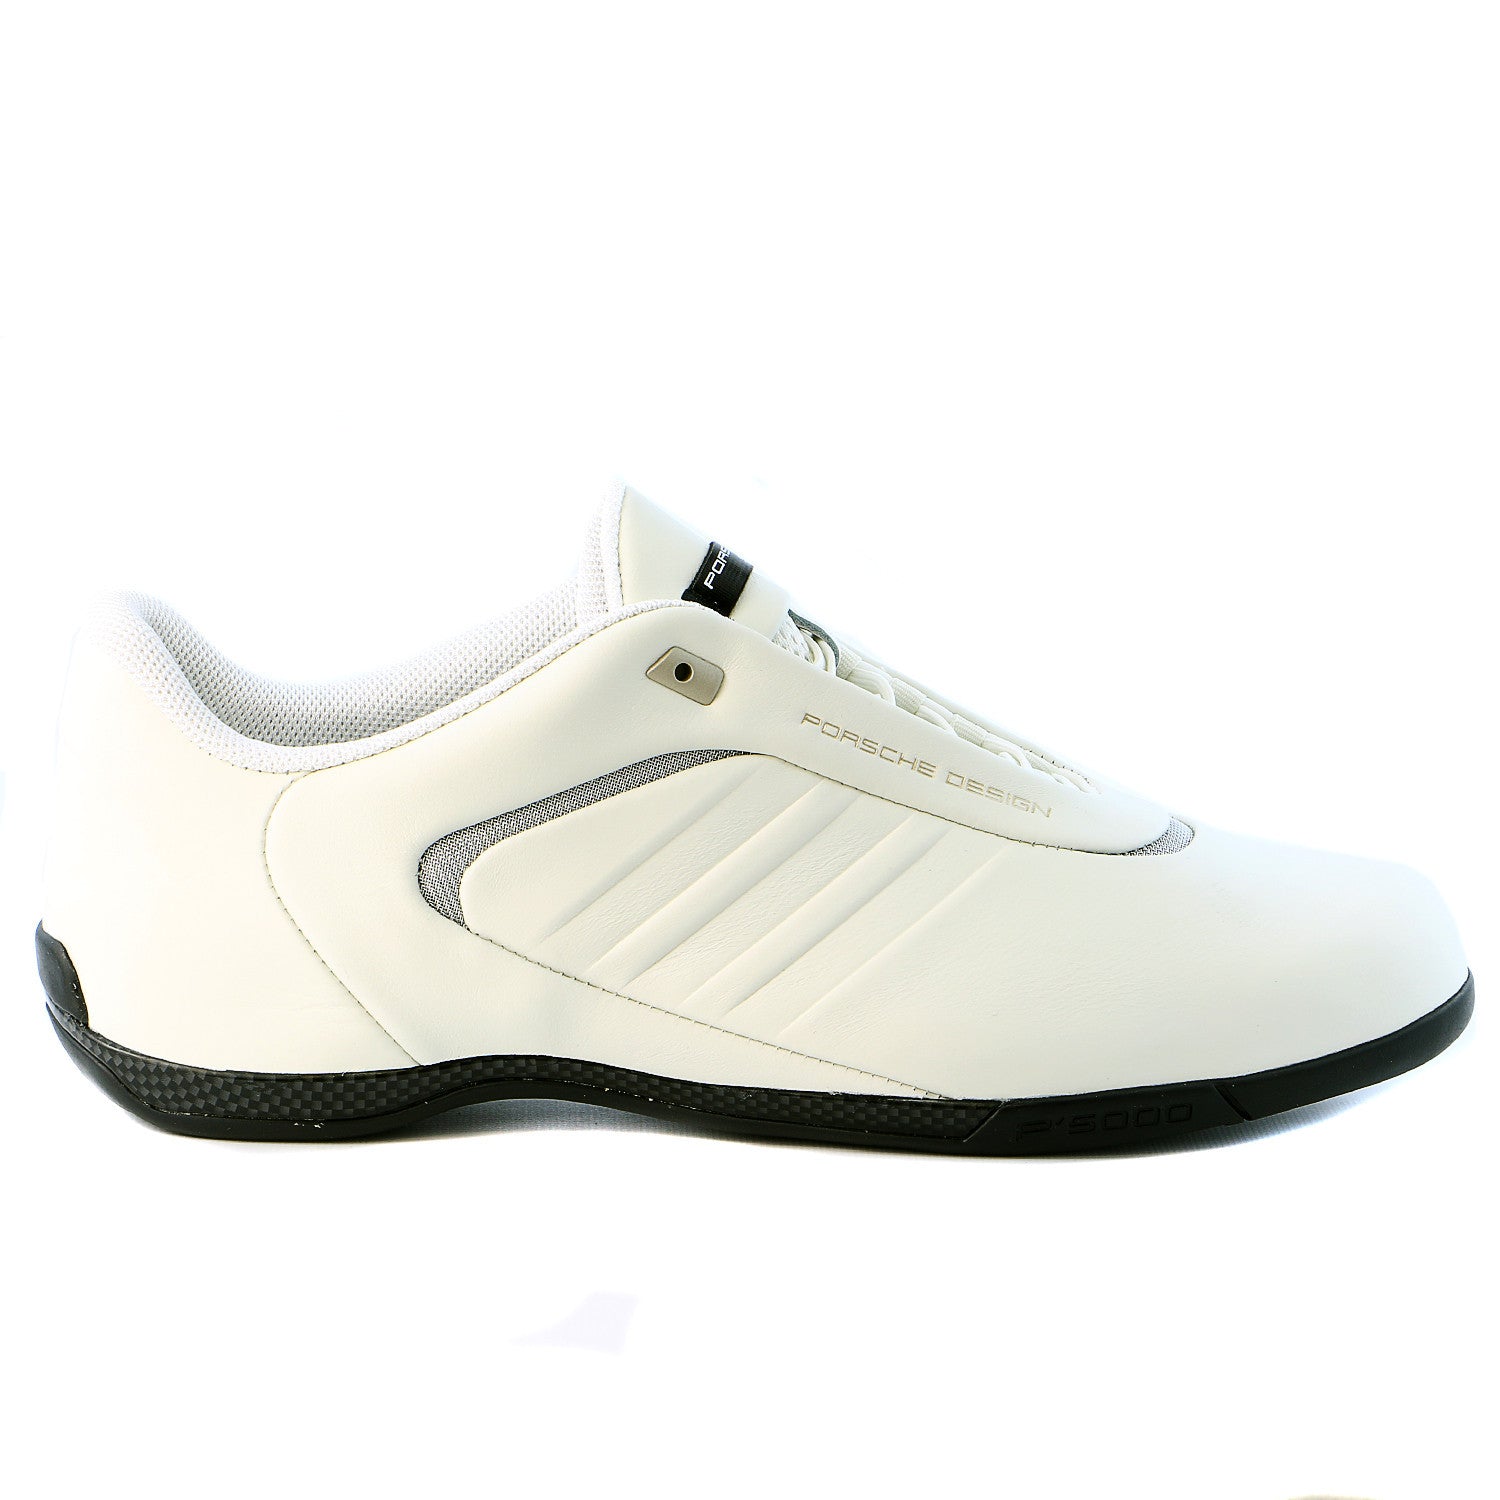 Porsche Design Athletic III Leather Sneaker Shoe - White VaPour/White -